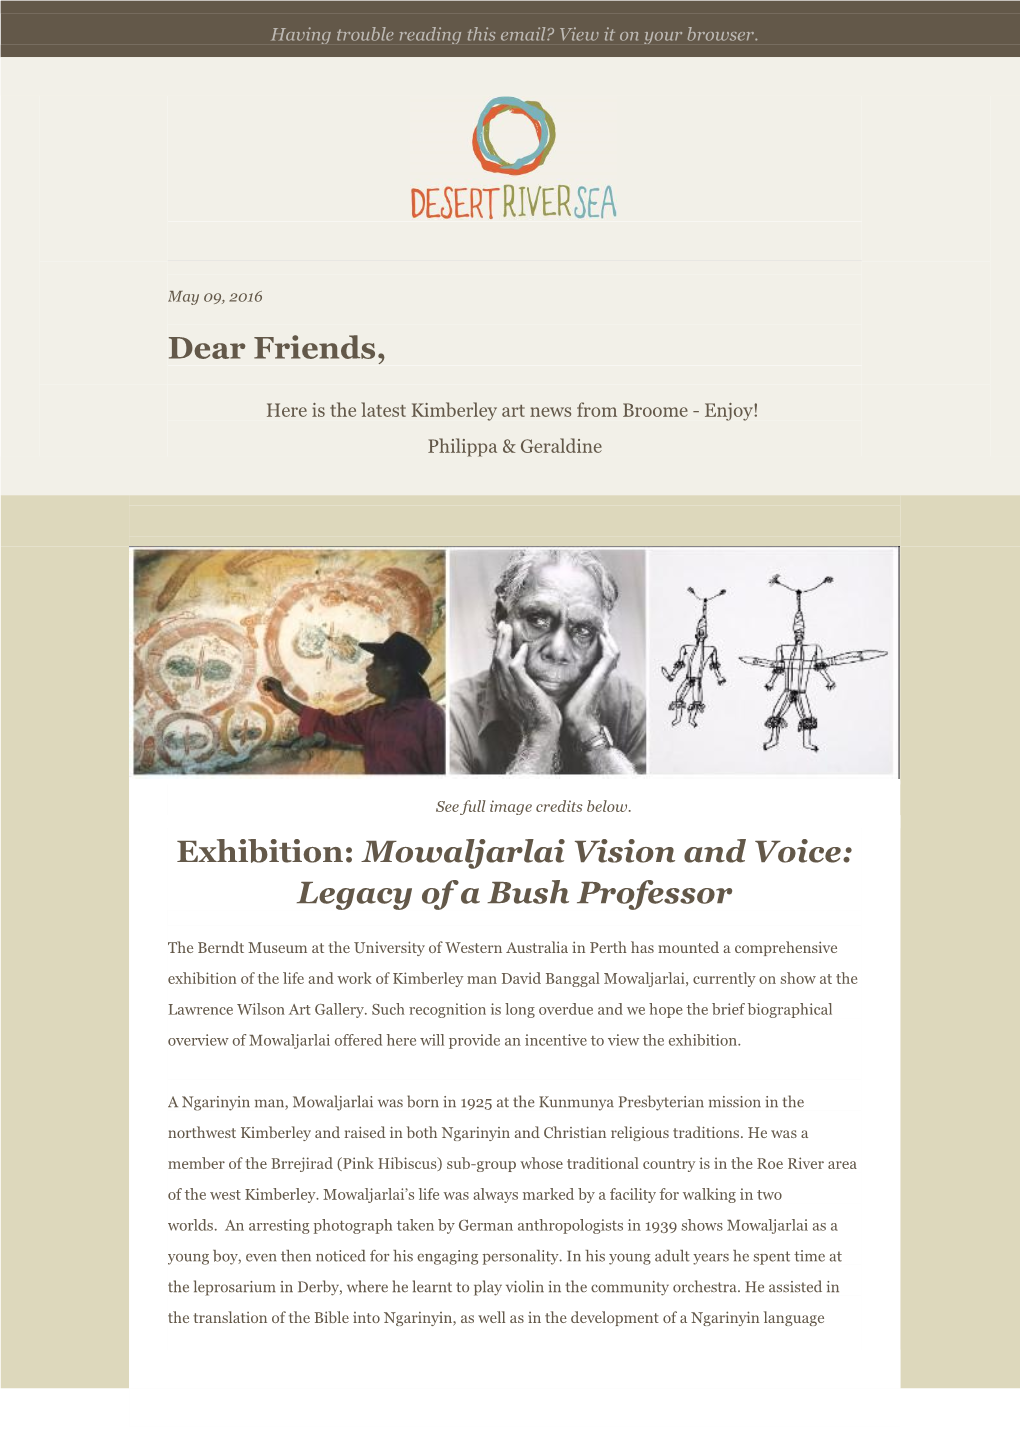 Dear Friends, Exhibition: Mowaljarlai Vision and Voice